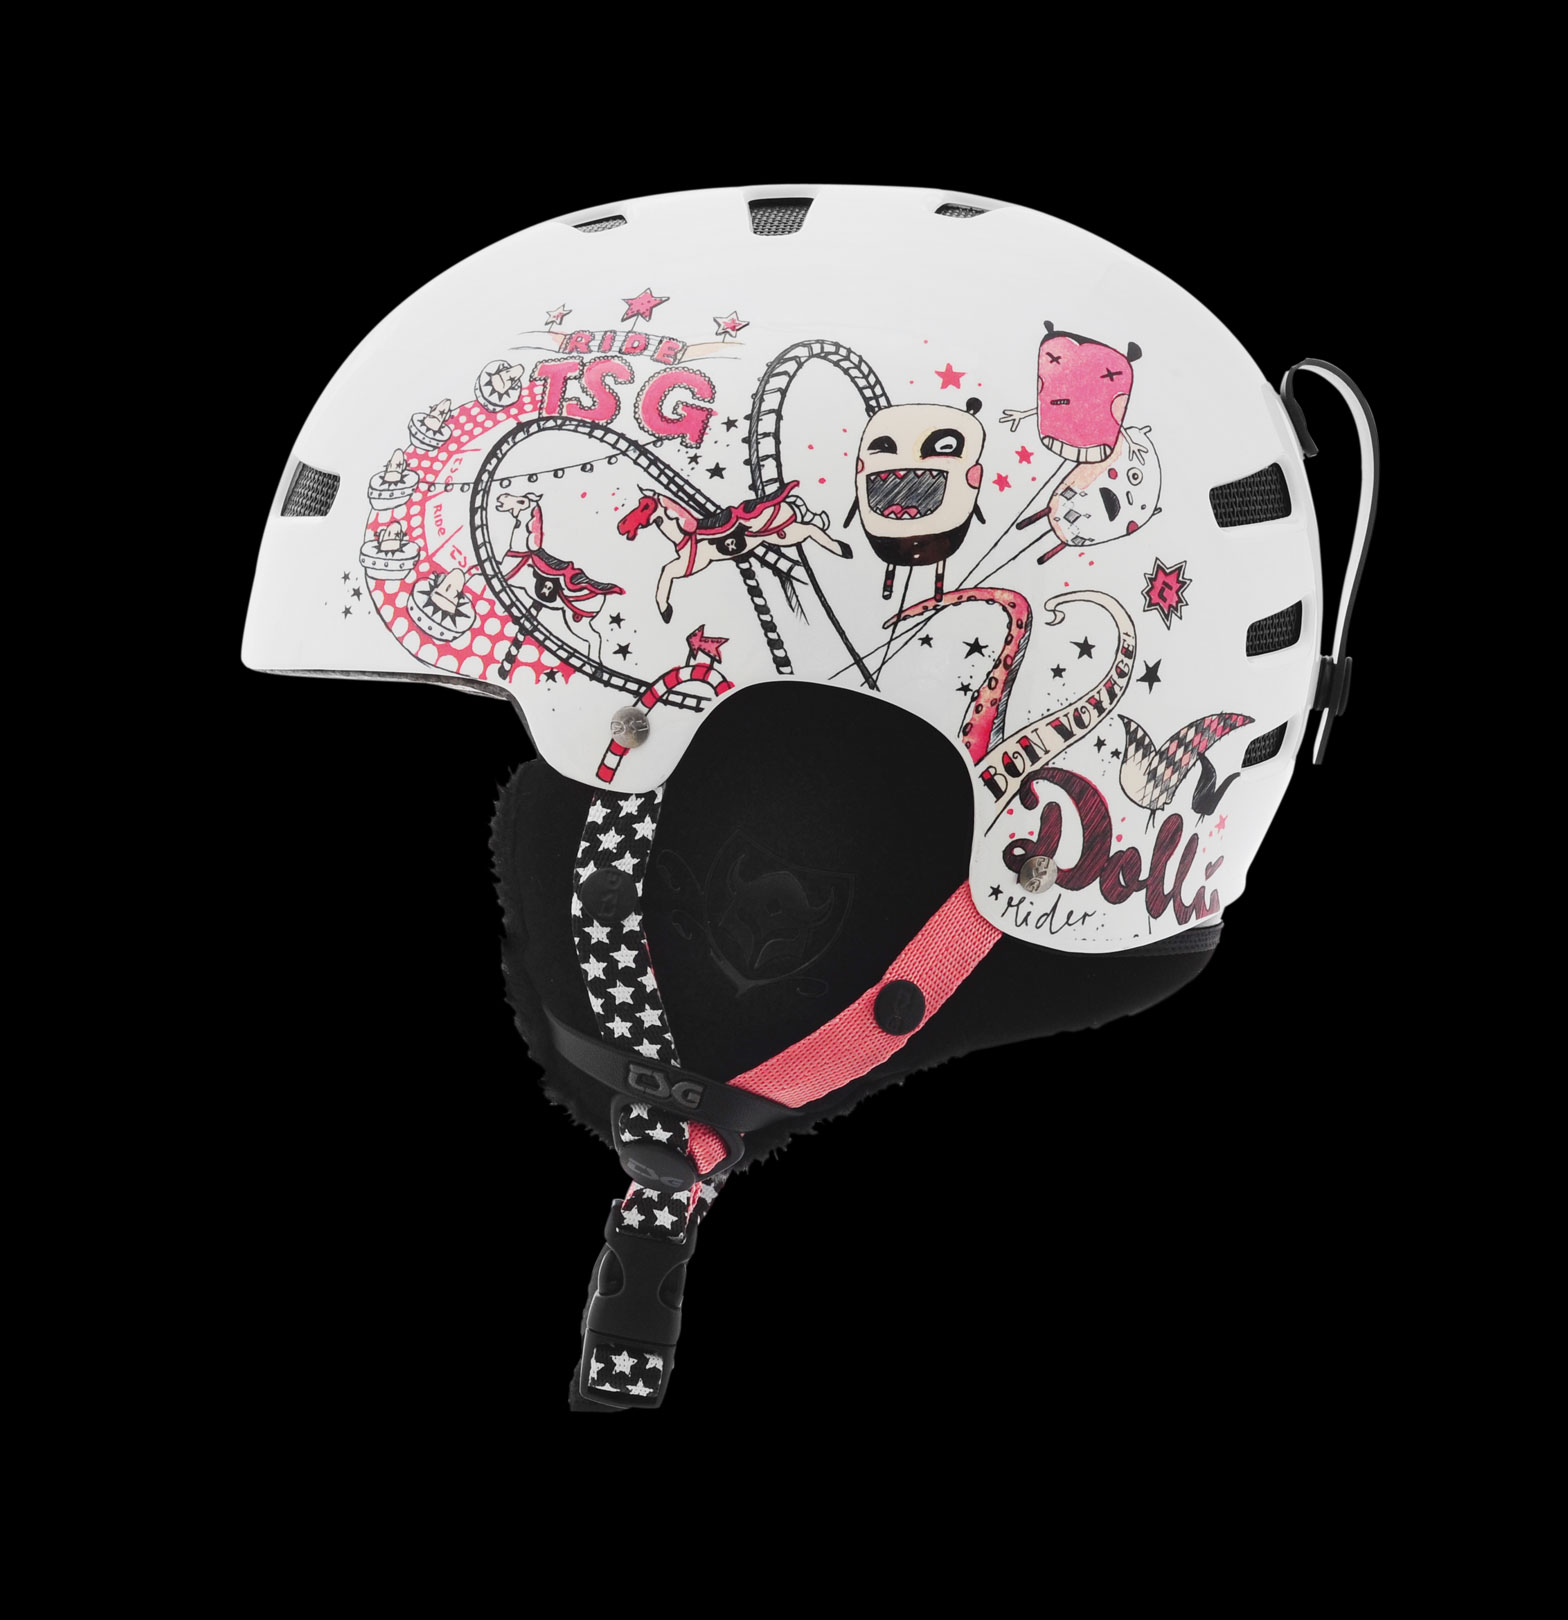 TSG Lotus Helmet design by sixxa, Kathi Macheiner